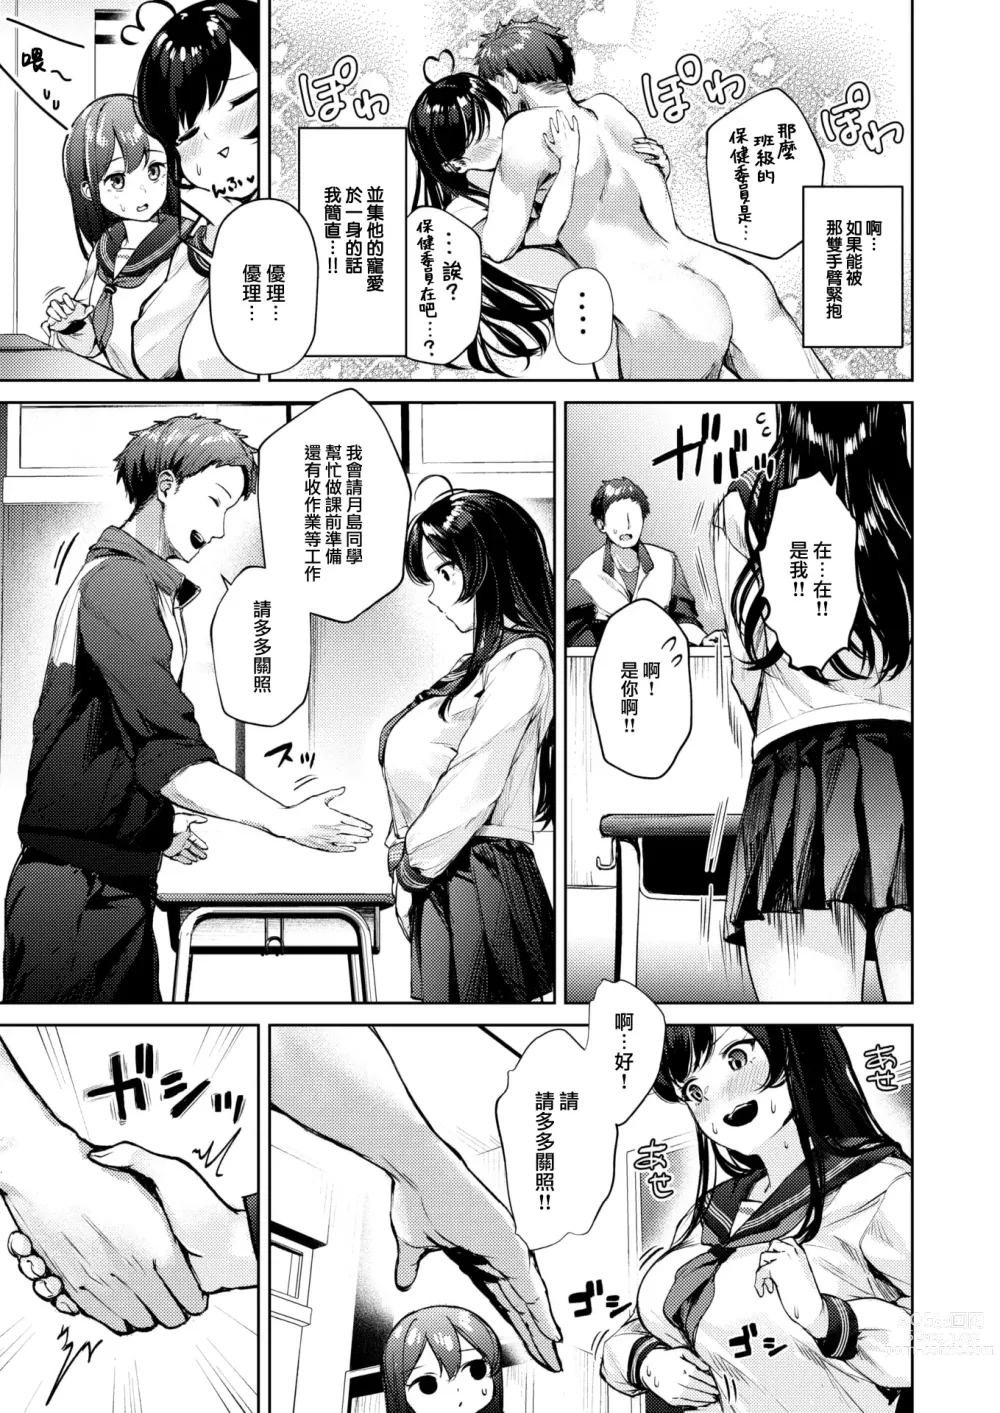 Page 4 of manga Kouburu Otome